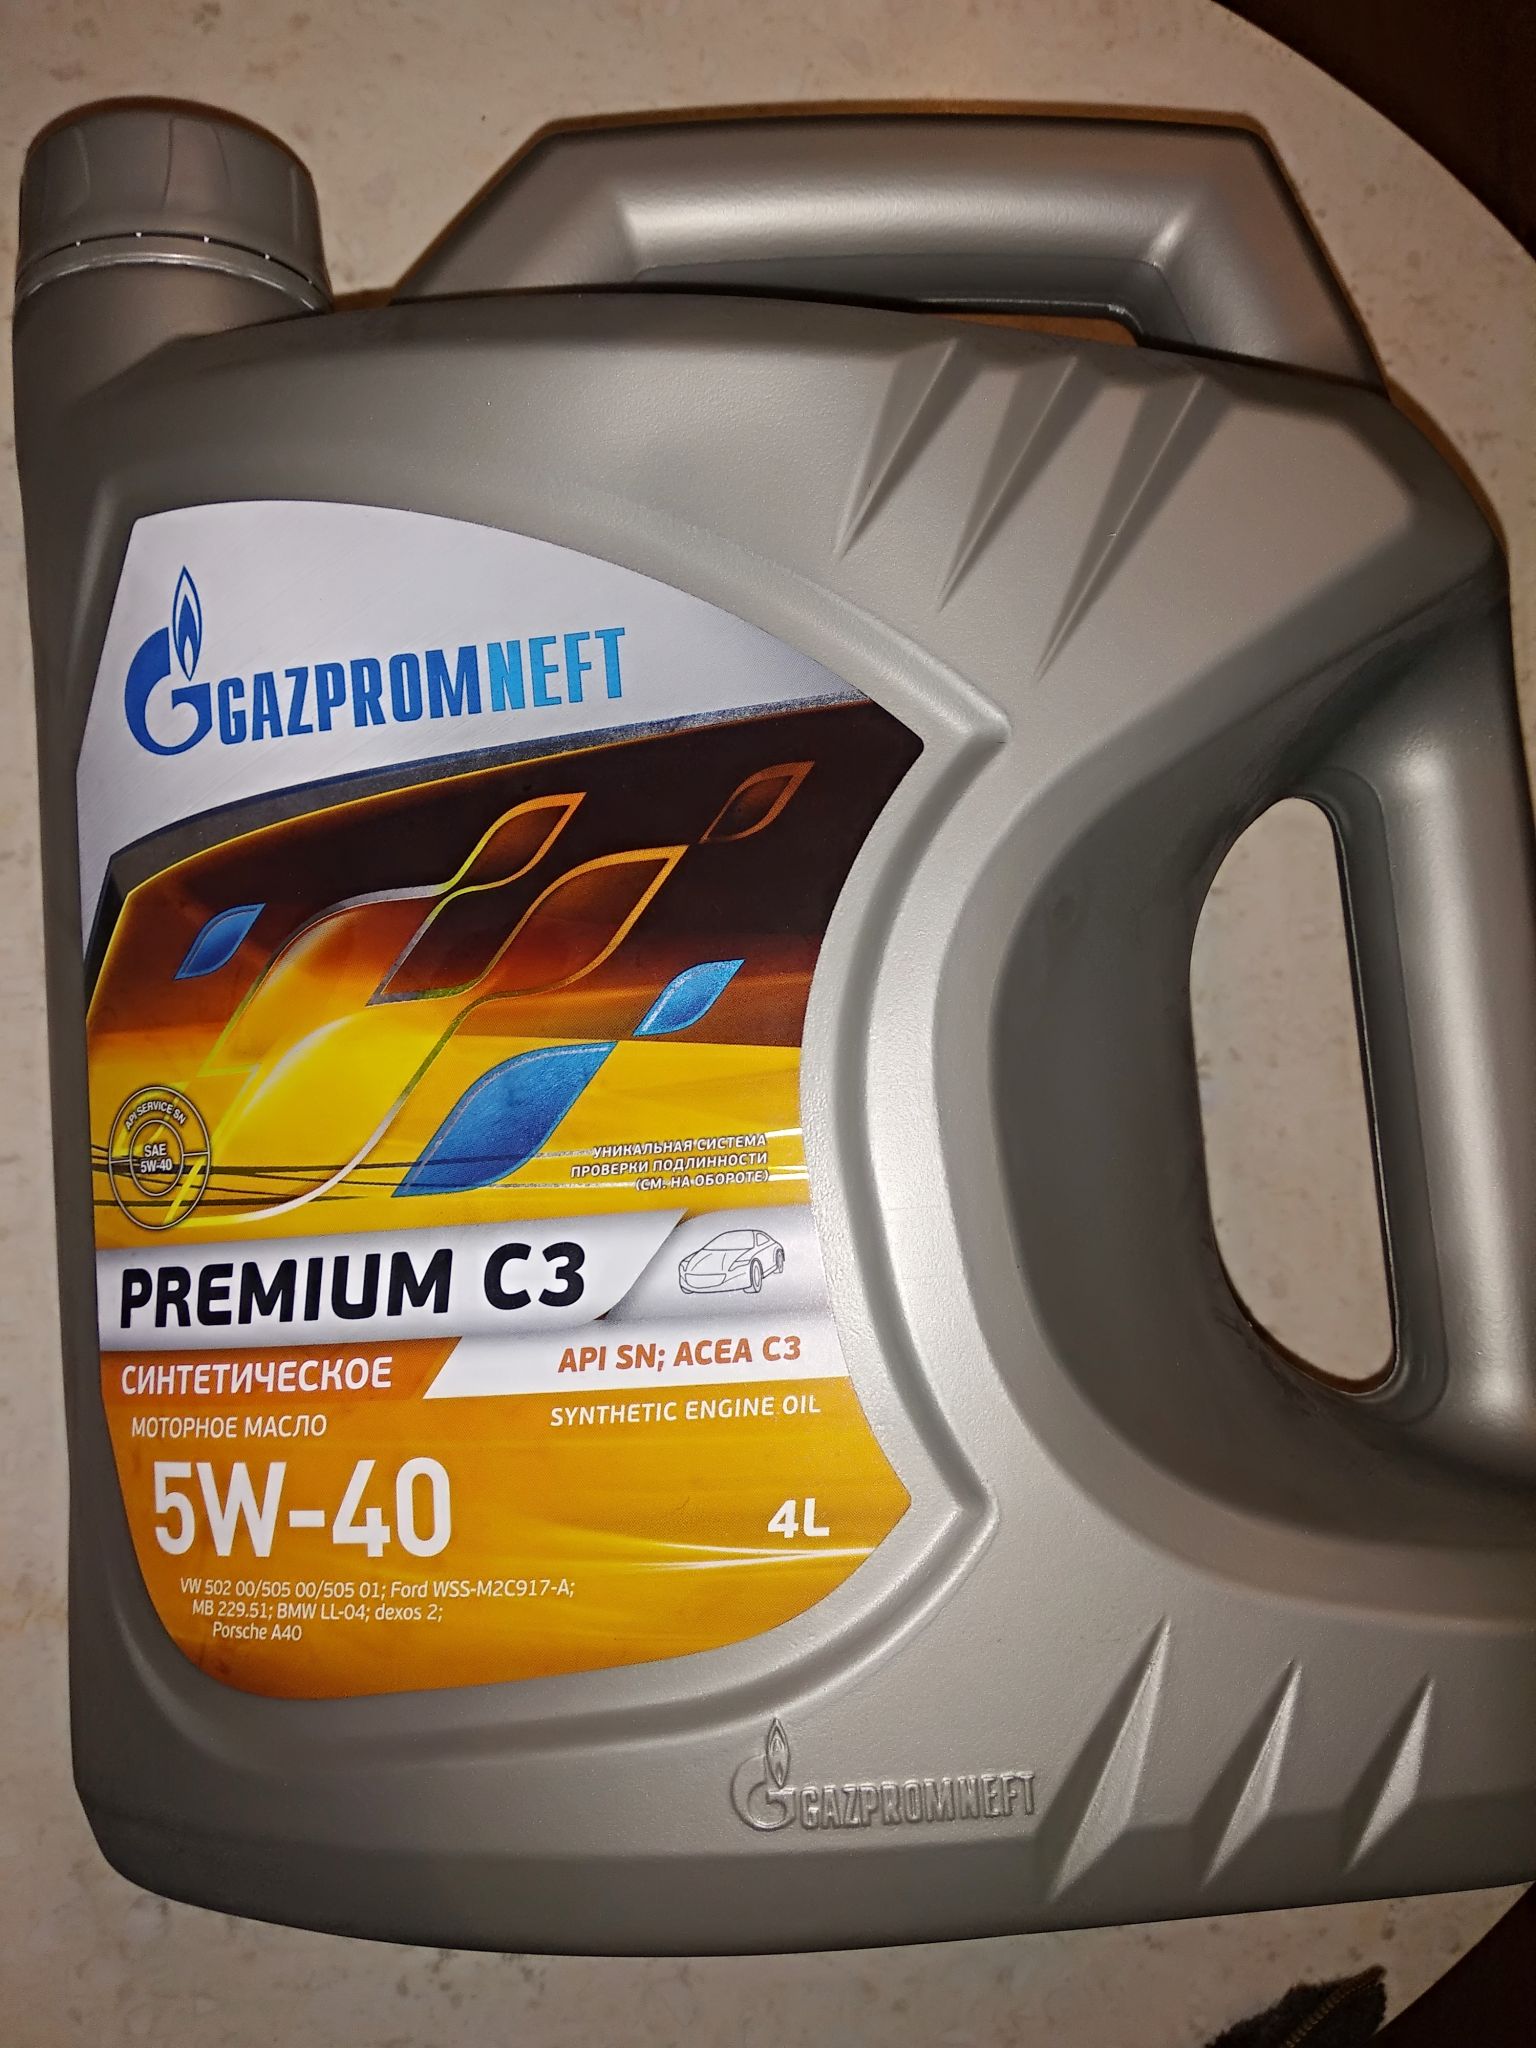 Gazpromneft масло моторное premium n 5w 40. Масло Газпромнефть 5w40 премиум. Gazpromneft Premium n 5w40 4л. Gazpromneft Premium c3 5w-40.